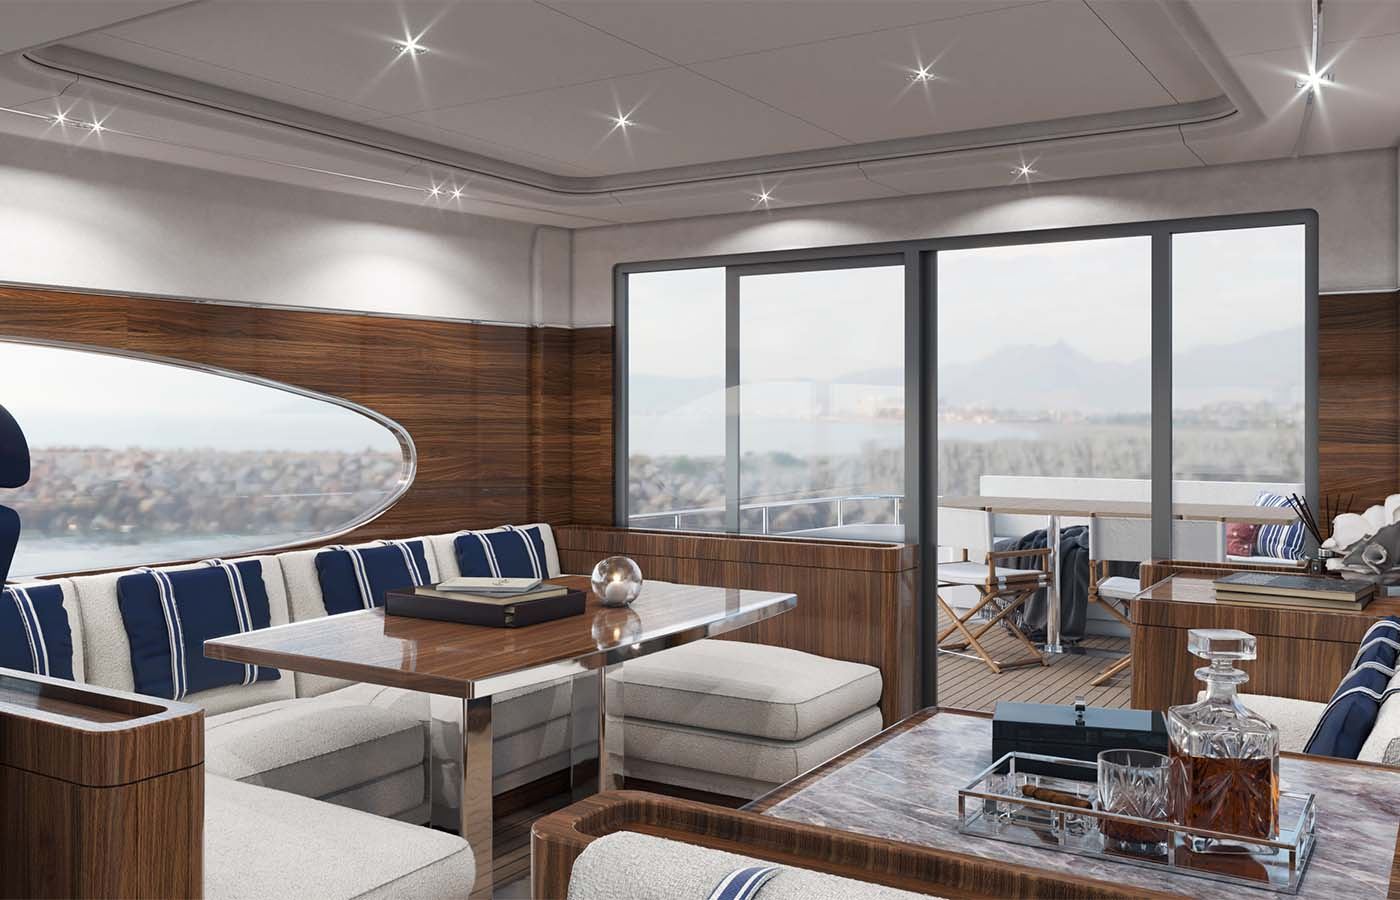 Classic motor yacht main salon interior design by Suvorov Yacht Design